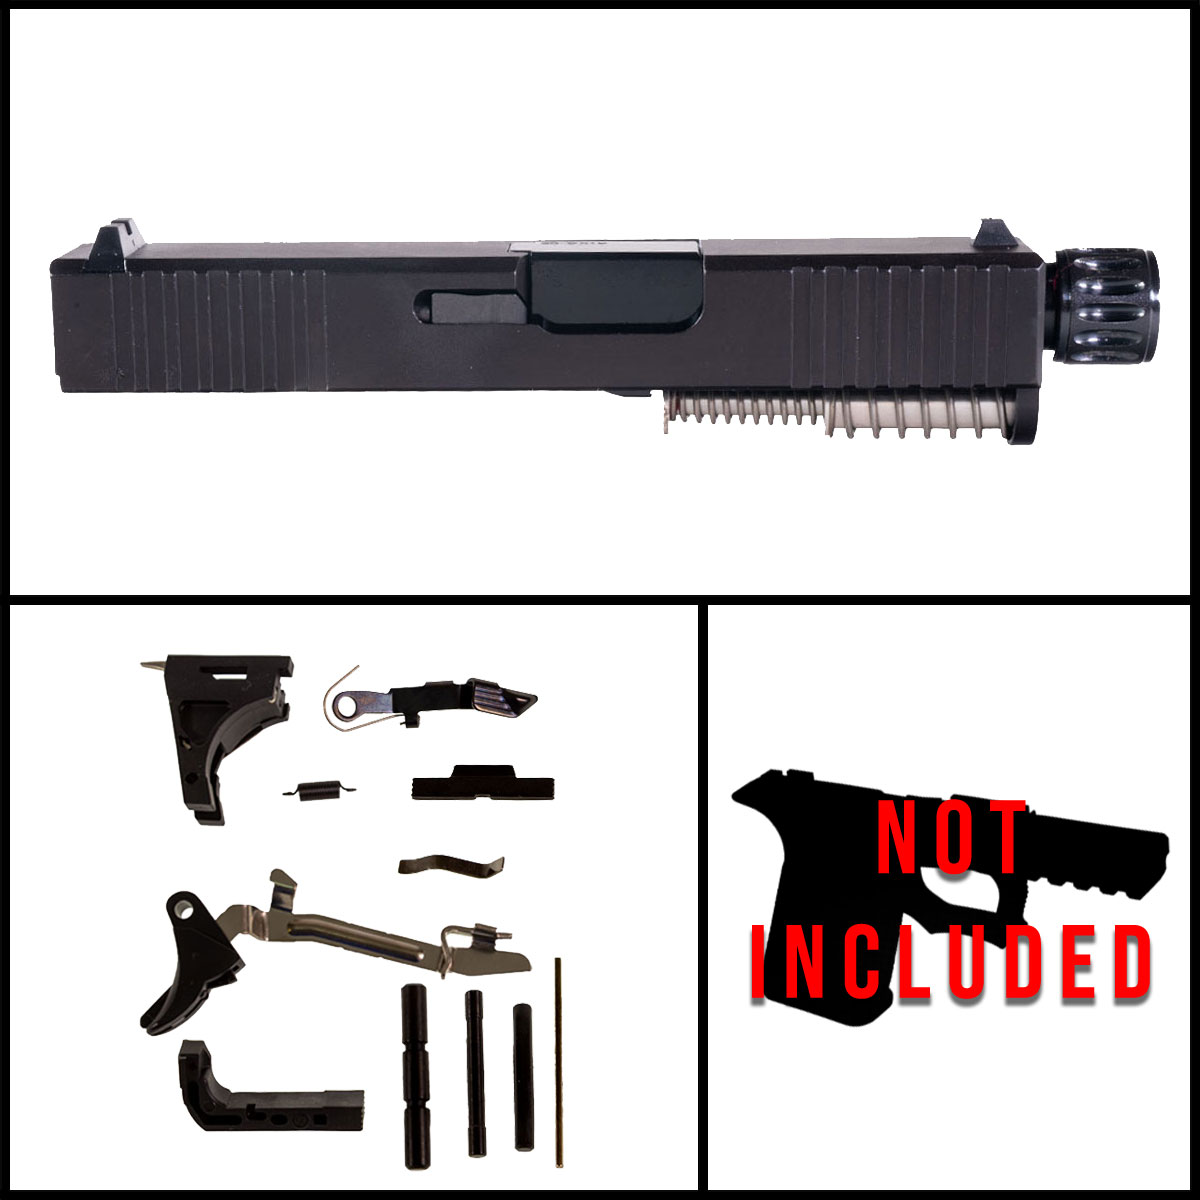 DDS 'Snub Nose' 9mm Full Pistol Build Kit (Everything Minus Frame) - Glock 26 Gen 1-2 Compatible